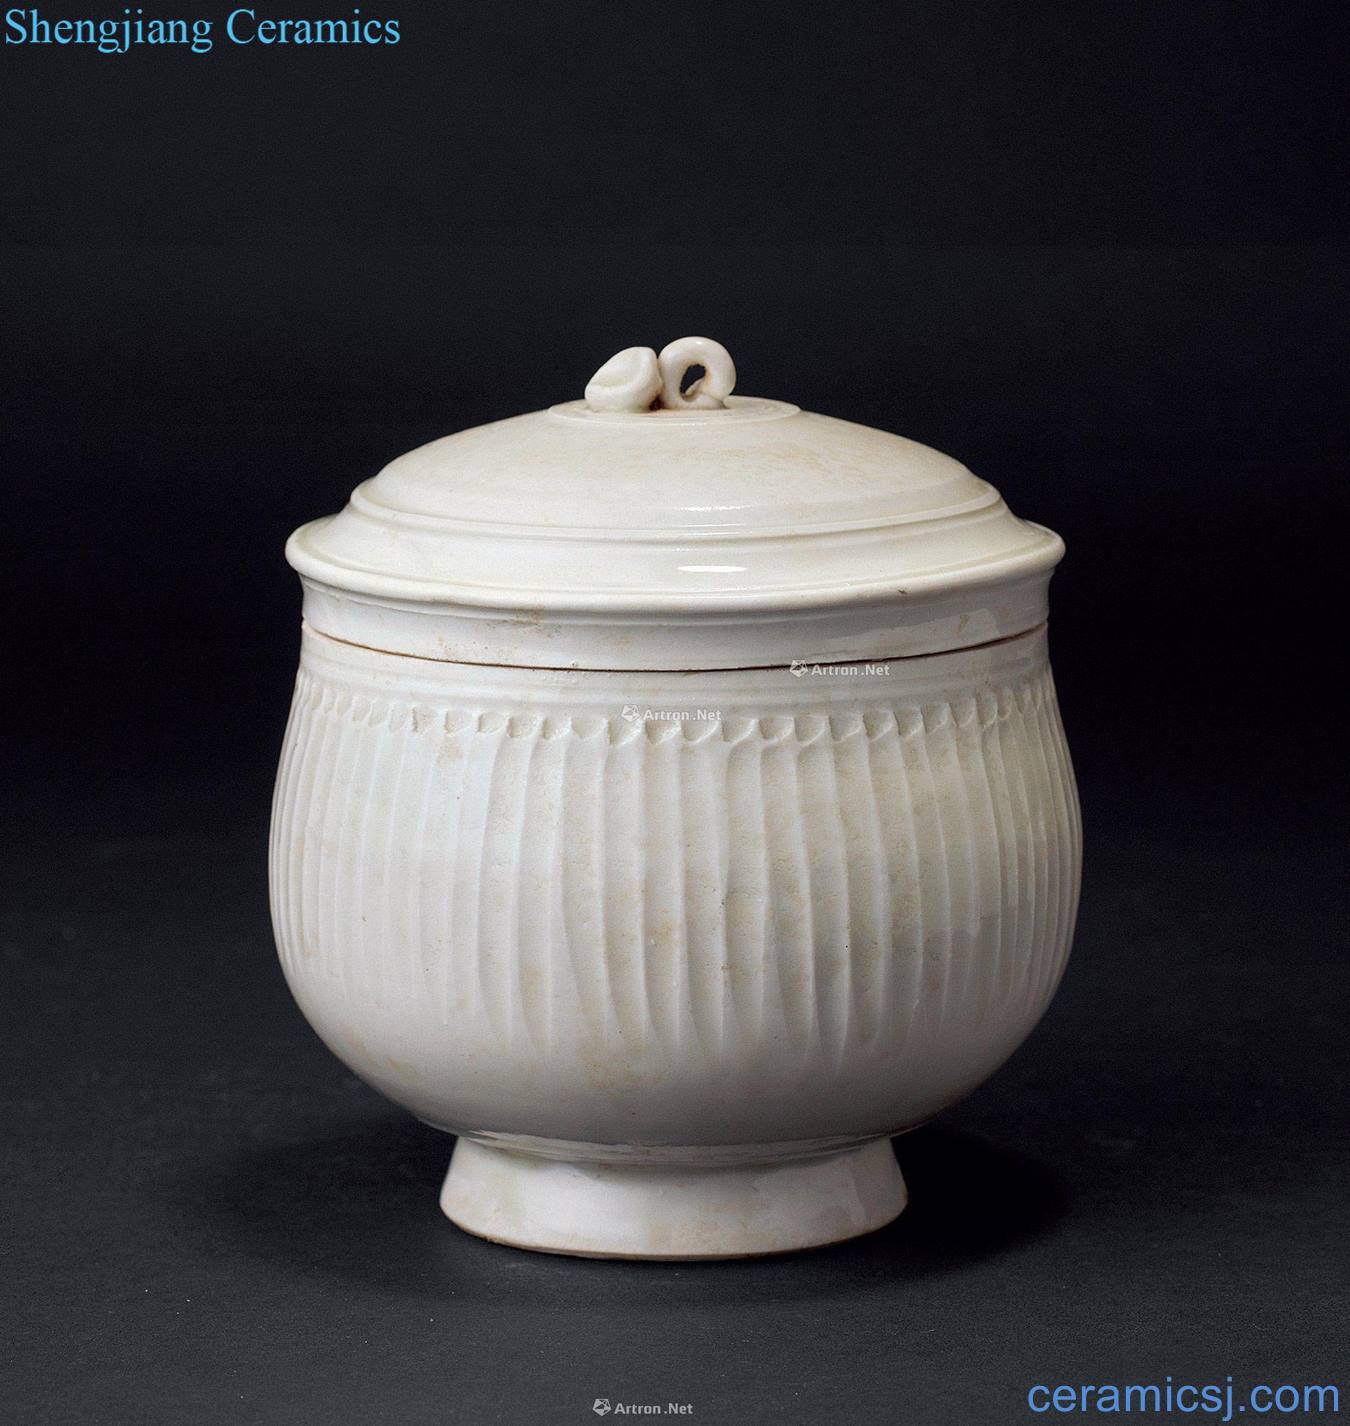 Previous kiln white glaze cover cylinder stripes